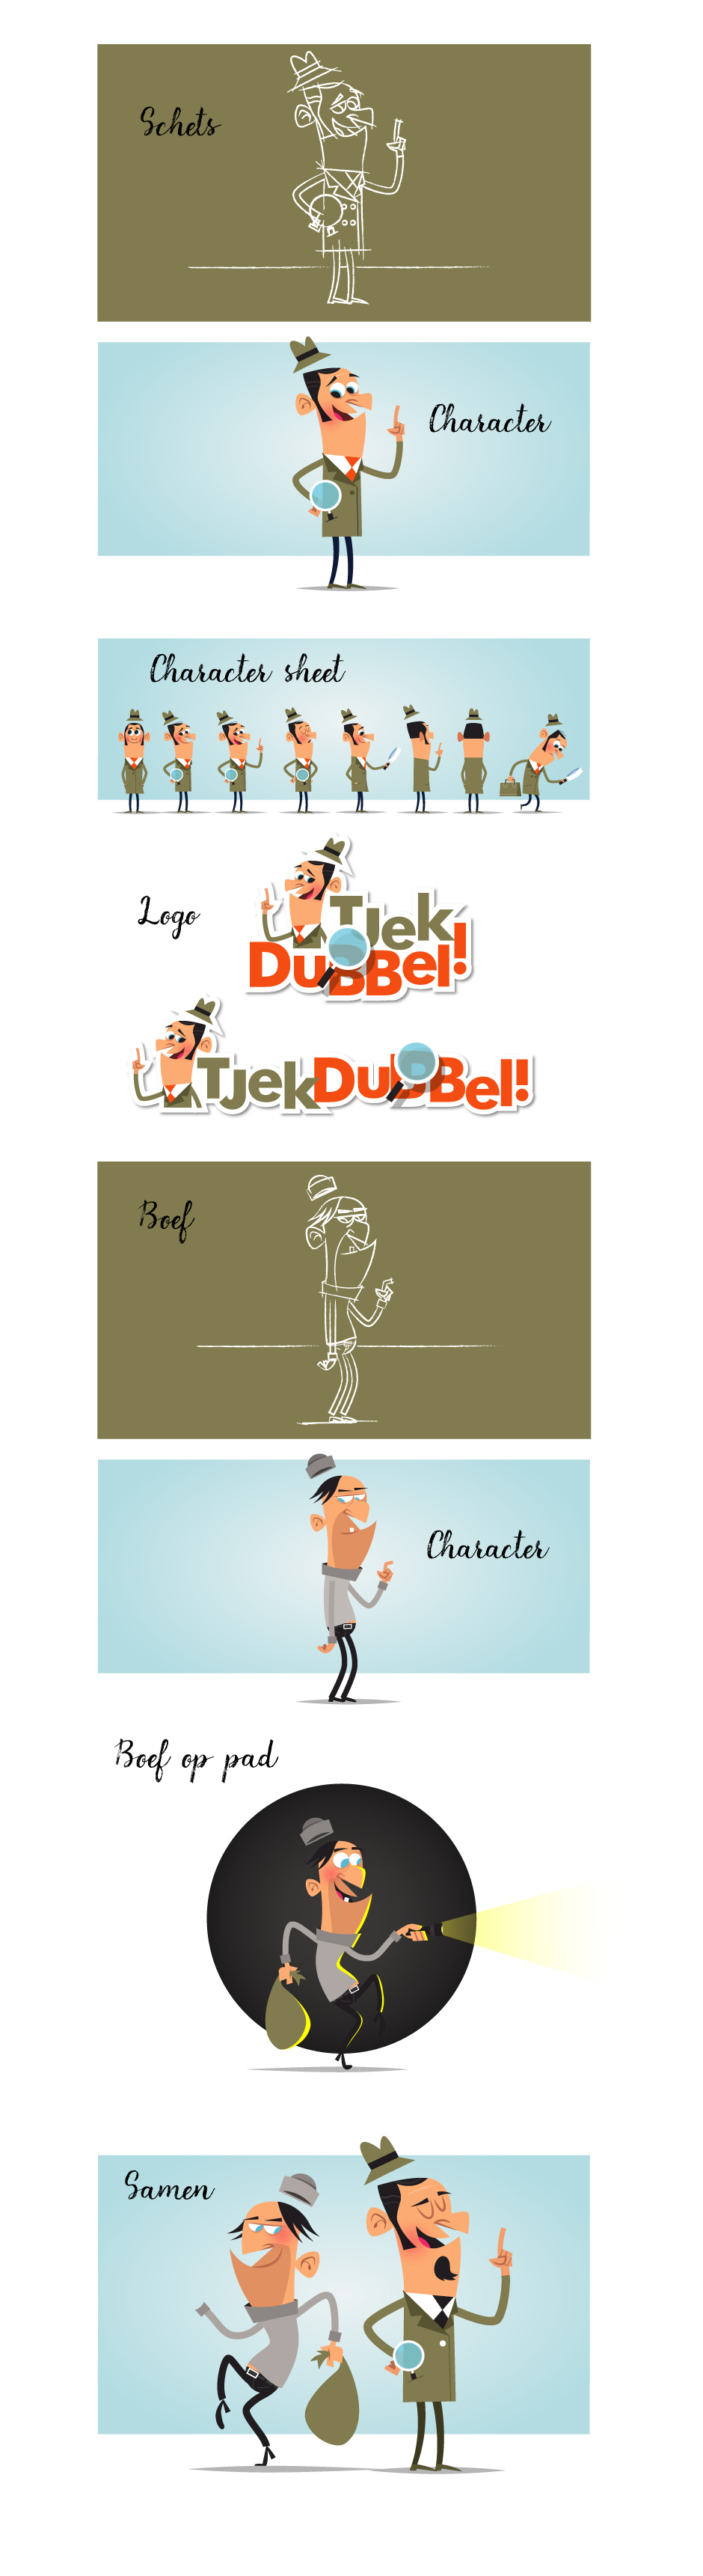 Tjek dubbel characterdesign reclamebureau Rotterdam freelance illustrator infographic laten maken Rotterdam animatie laten maken